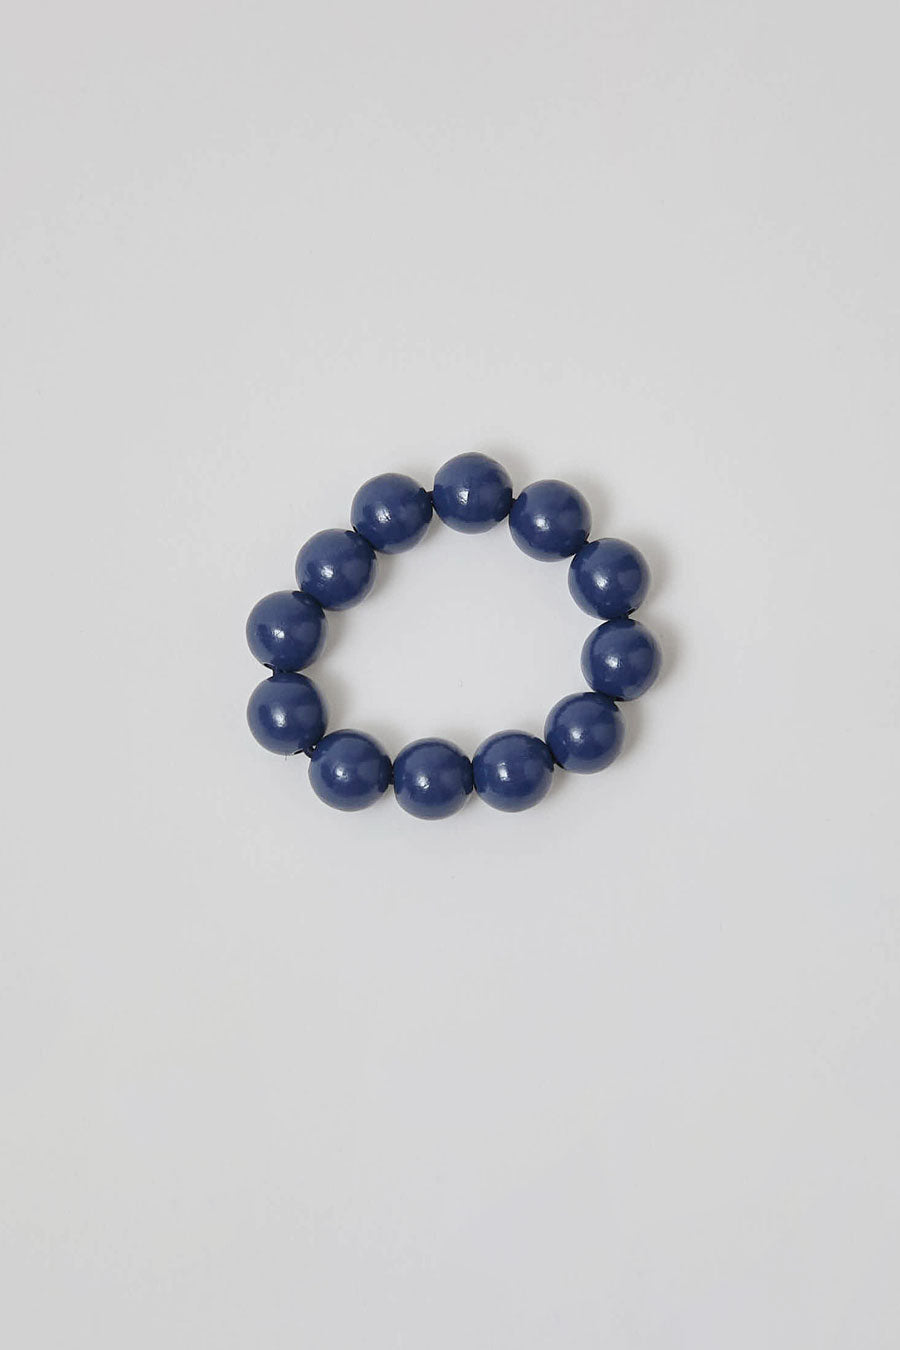 Ina Seifart Big Perlen Bracelet in Blueberry